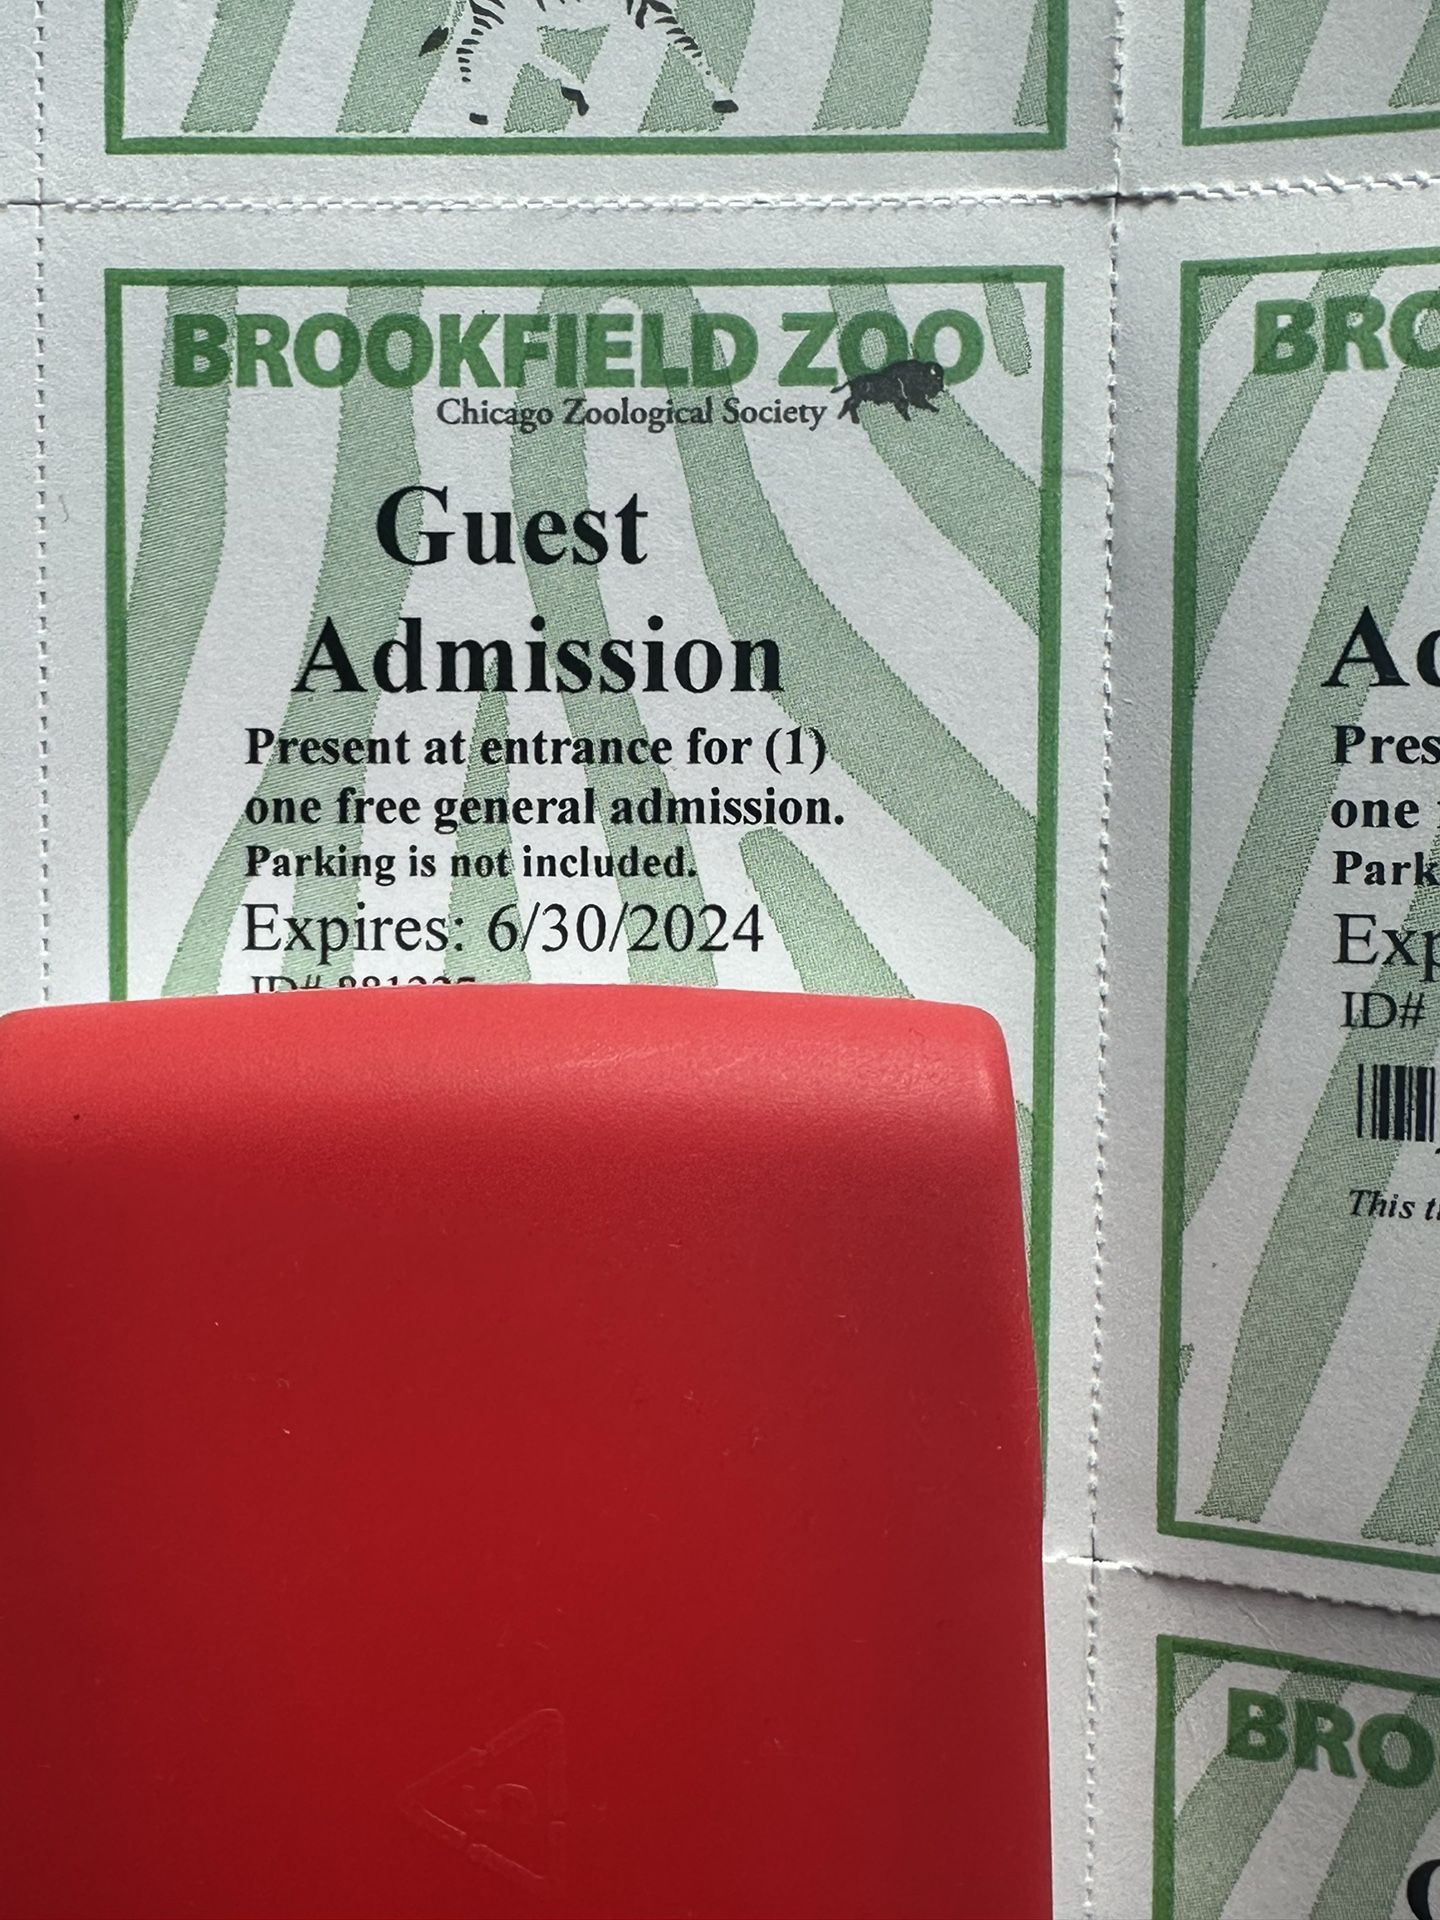 6admission Ticket Brookfield Zoo